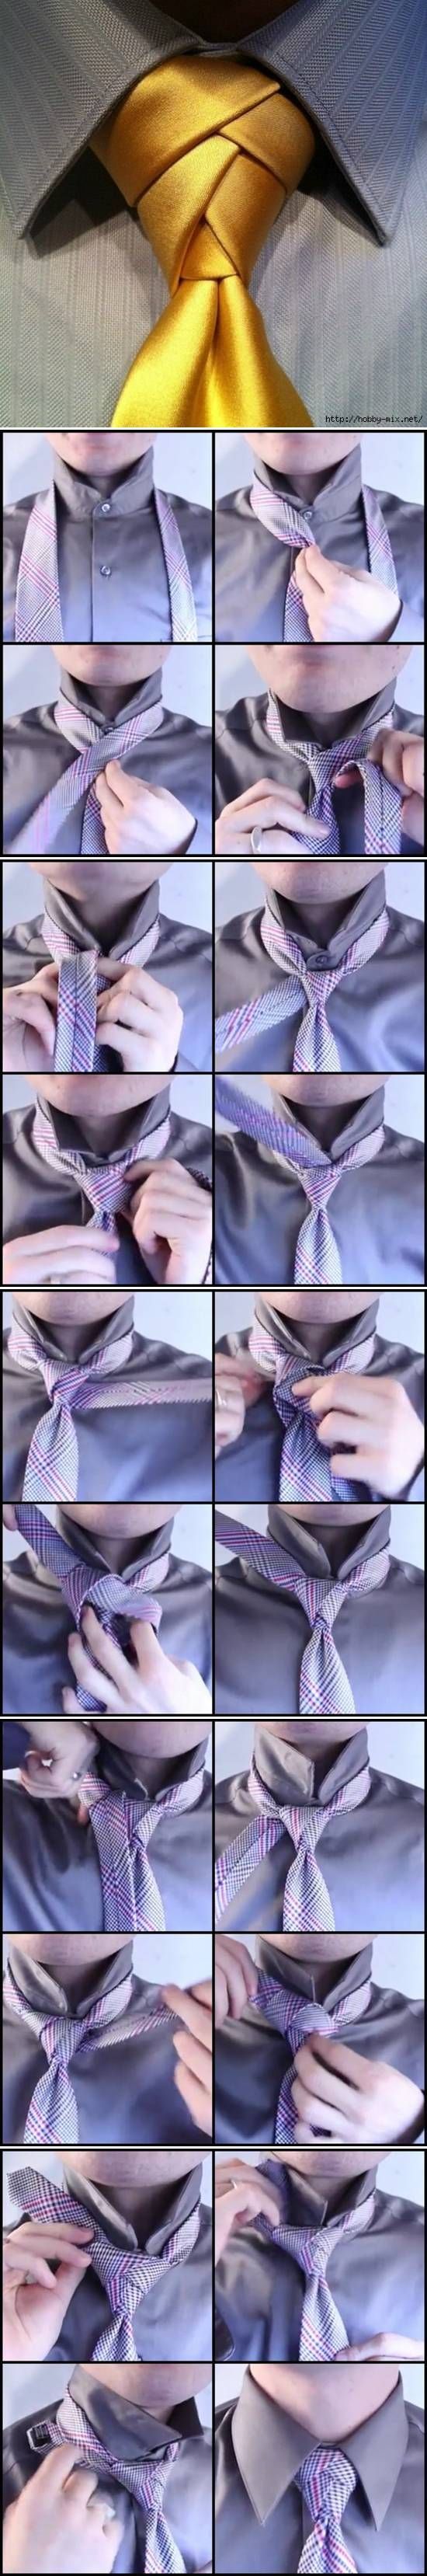 DIY Beautiful Tie Knot